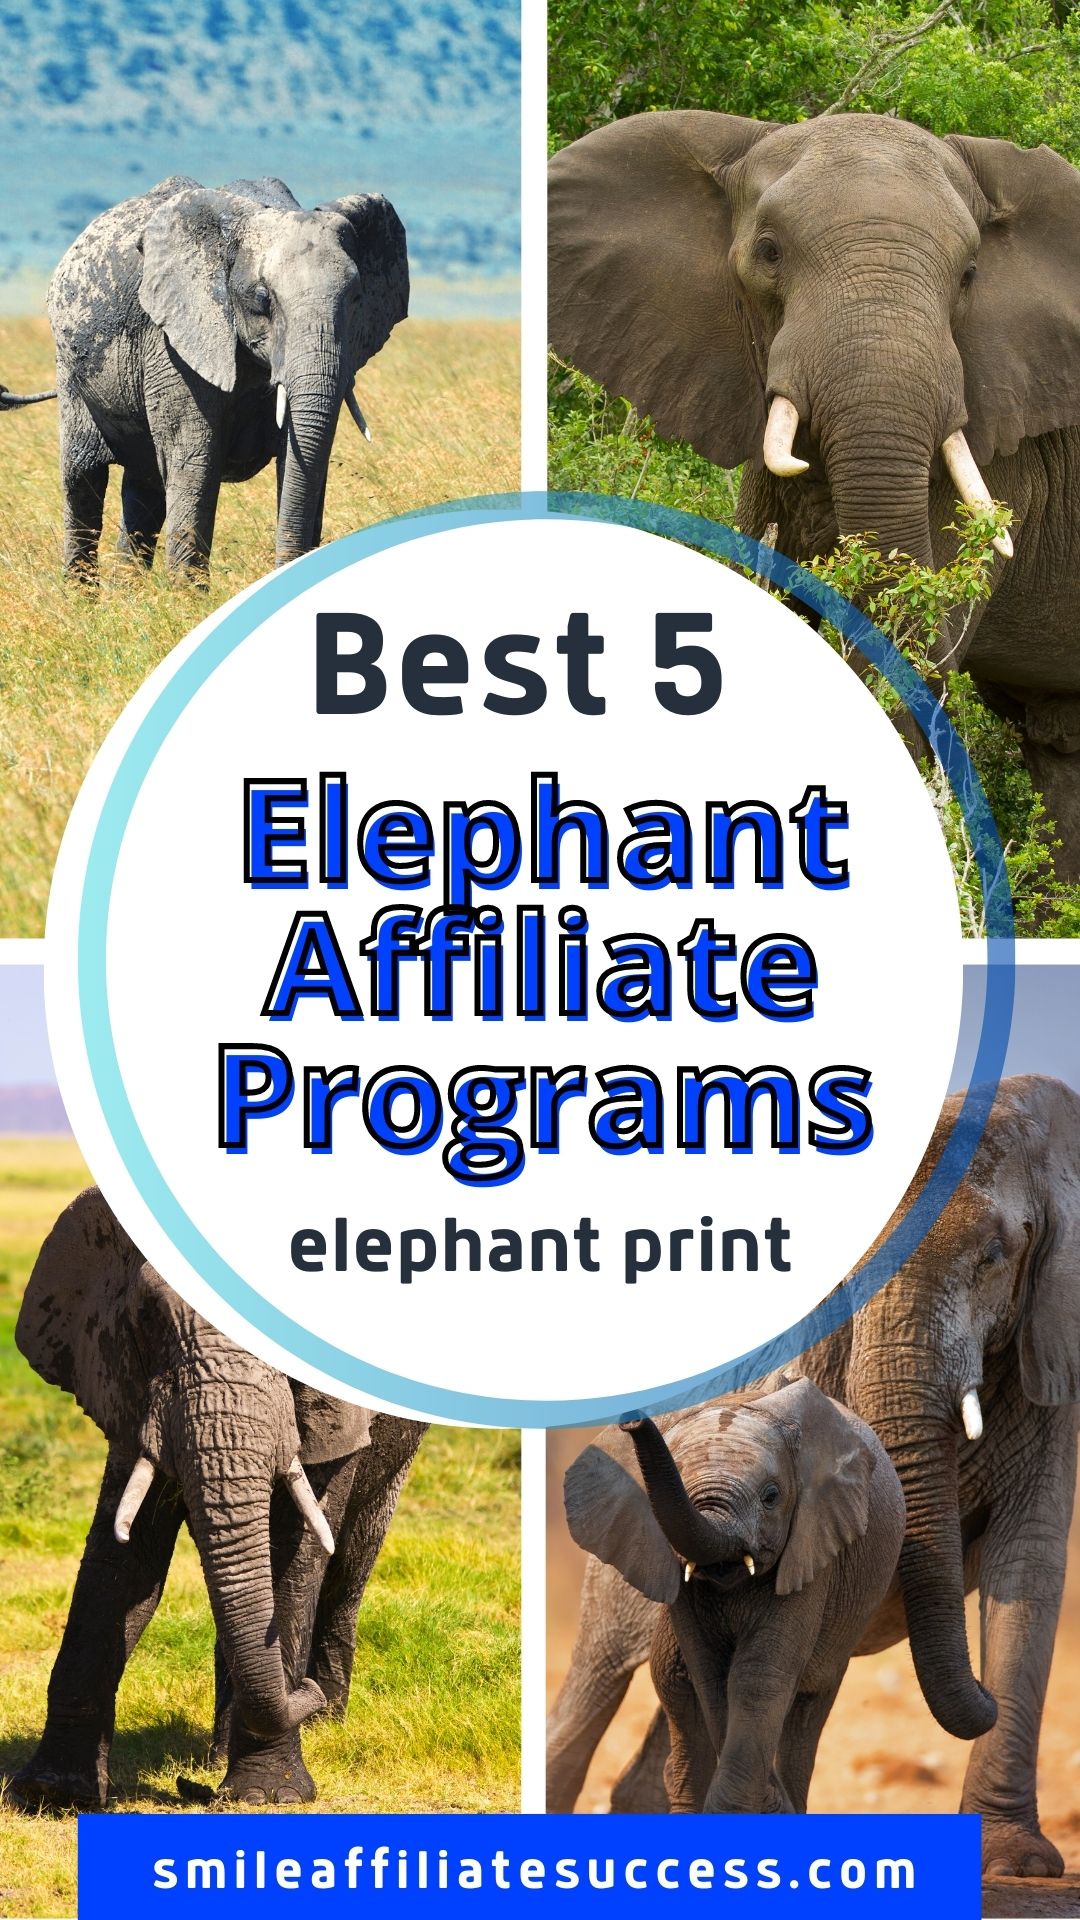 Best 3 Elephant Affiliate Programs